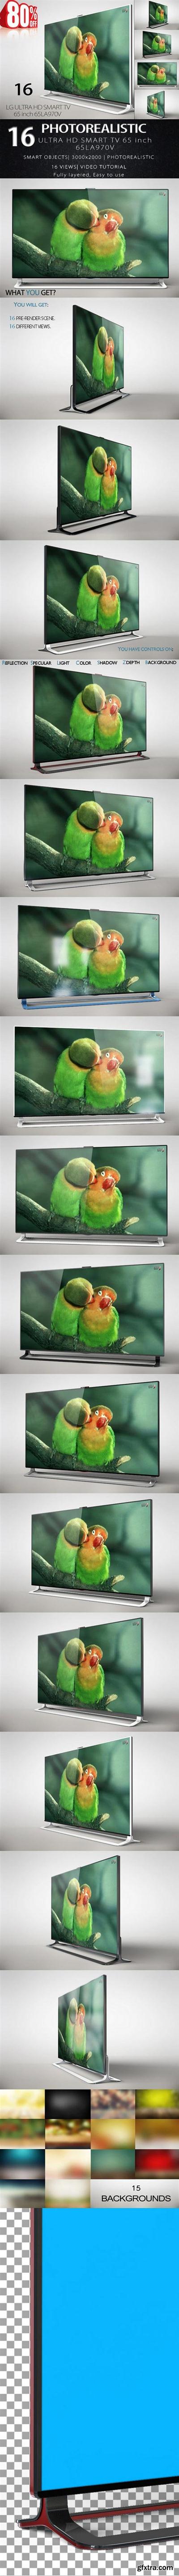 CM - Bundle LG Ultra HD Smart Tv 65 inch 572849